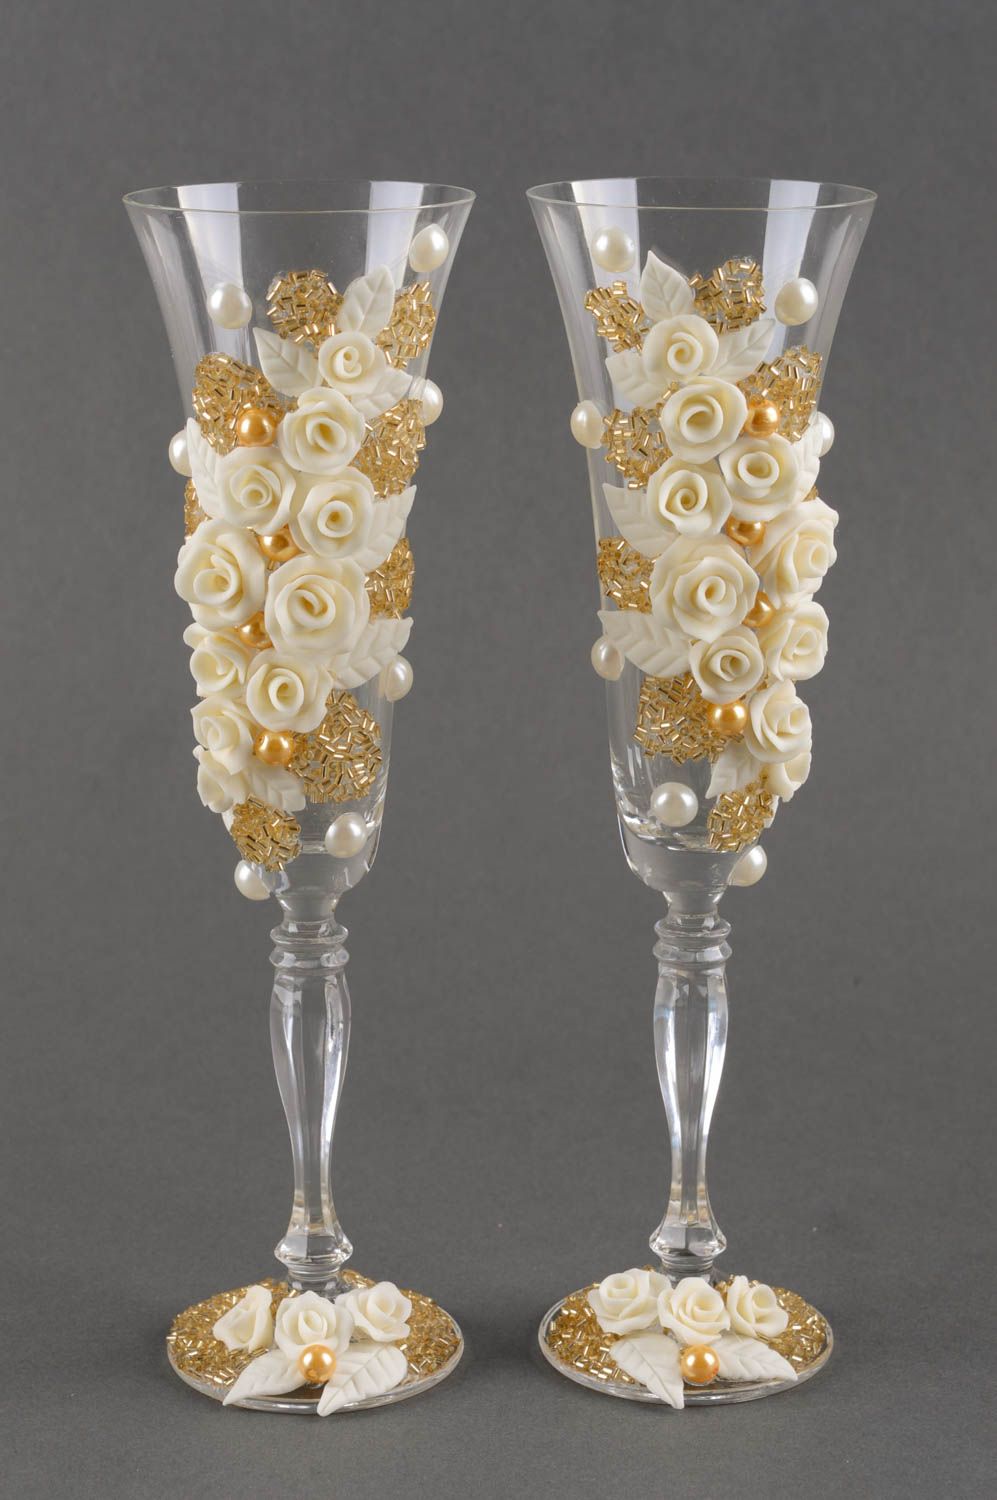 Decorative wine glasses champagne flutes handmade wedding decor wedding gifts photo 2